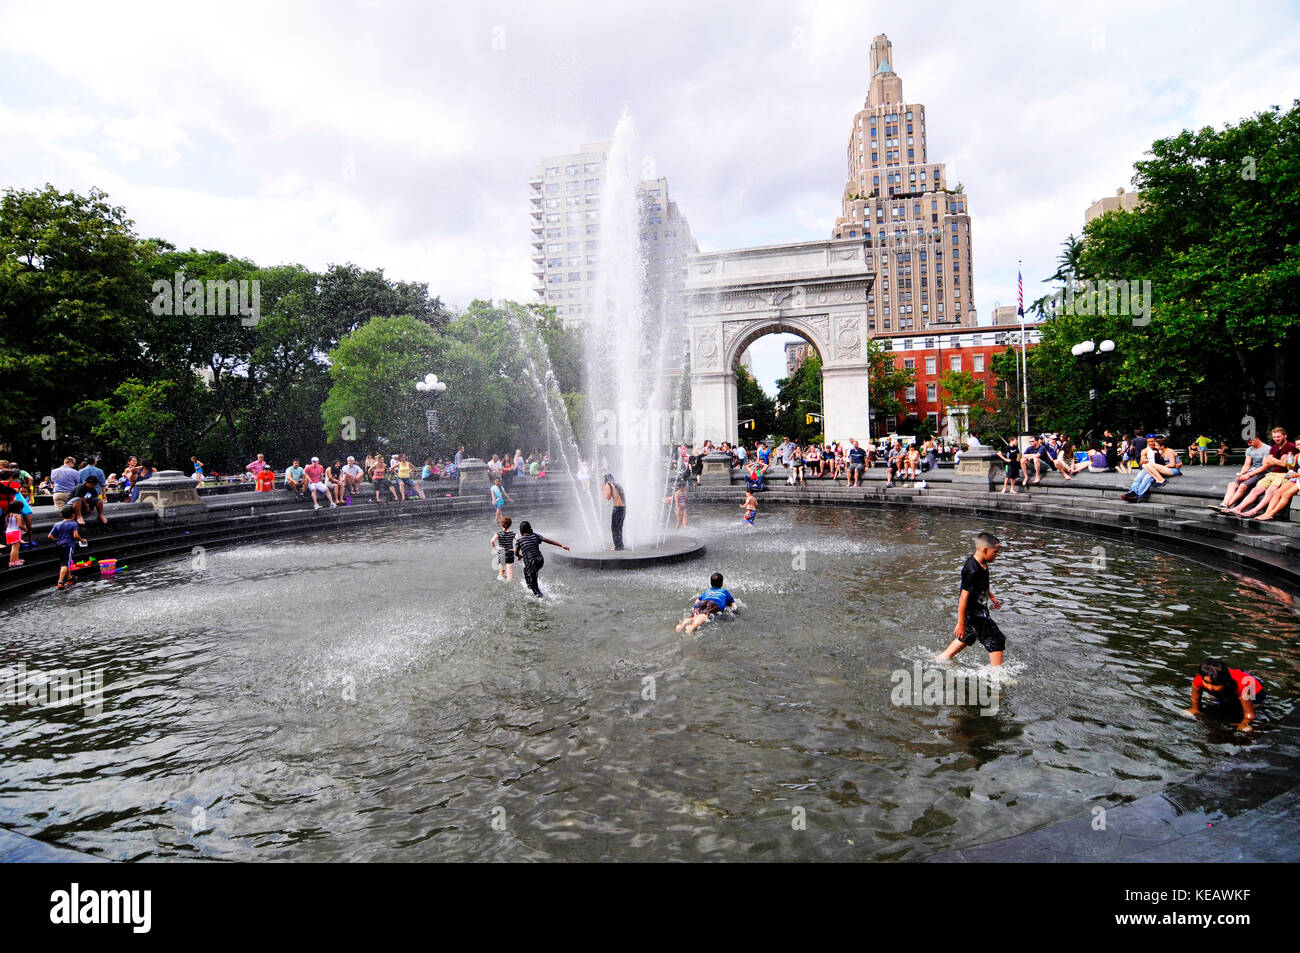 Washington Square Park Is A Famous Public Park In Greenwich Village, Manhattan. Stock Photo